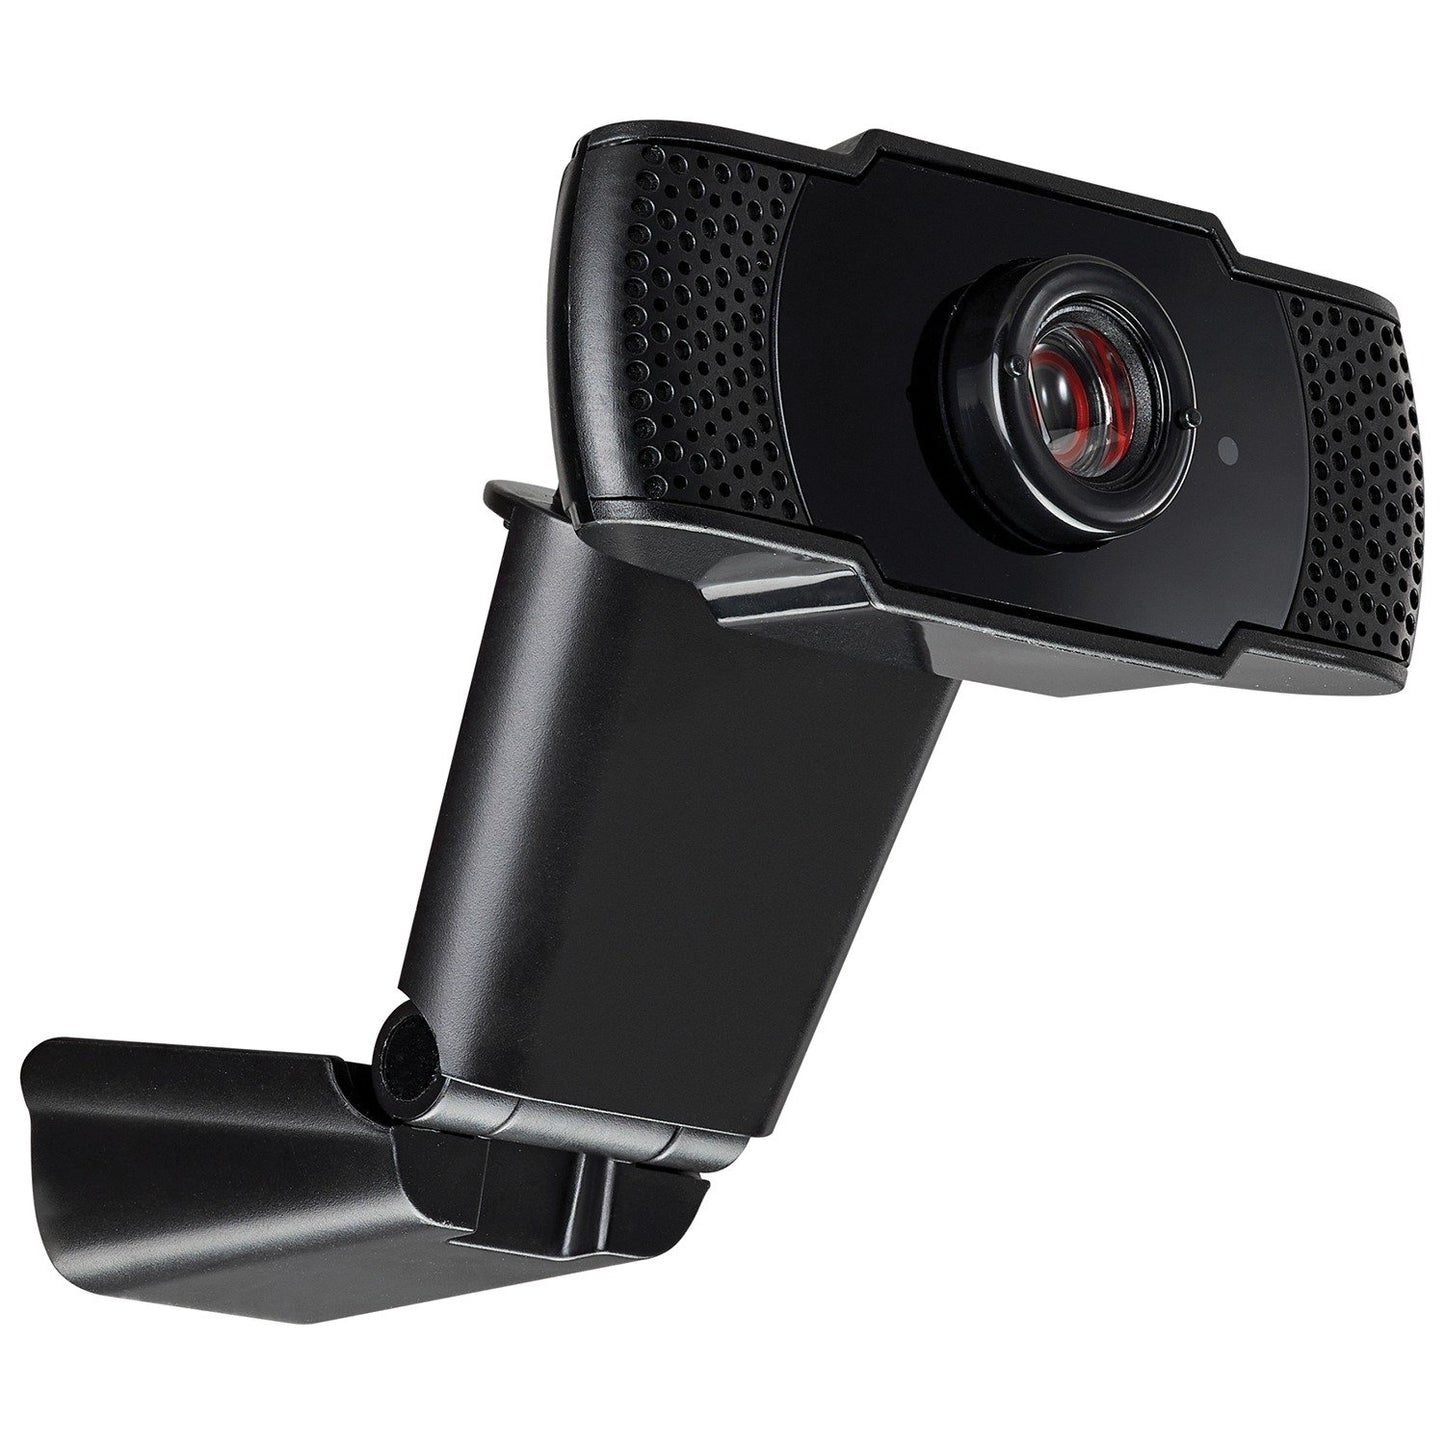 iLive IWC180 480p Webcam w/Microphone